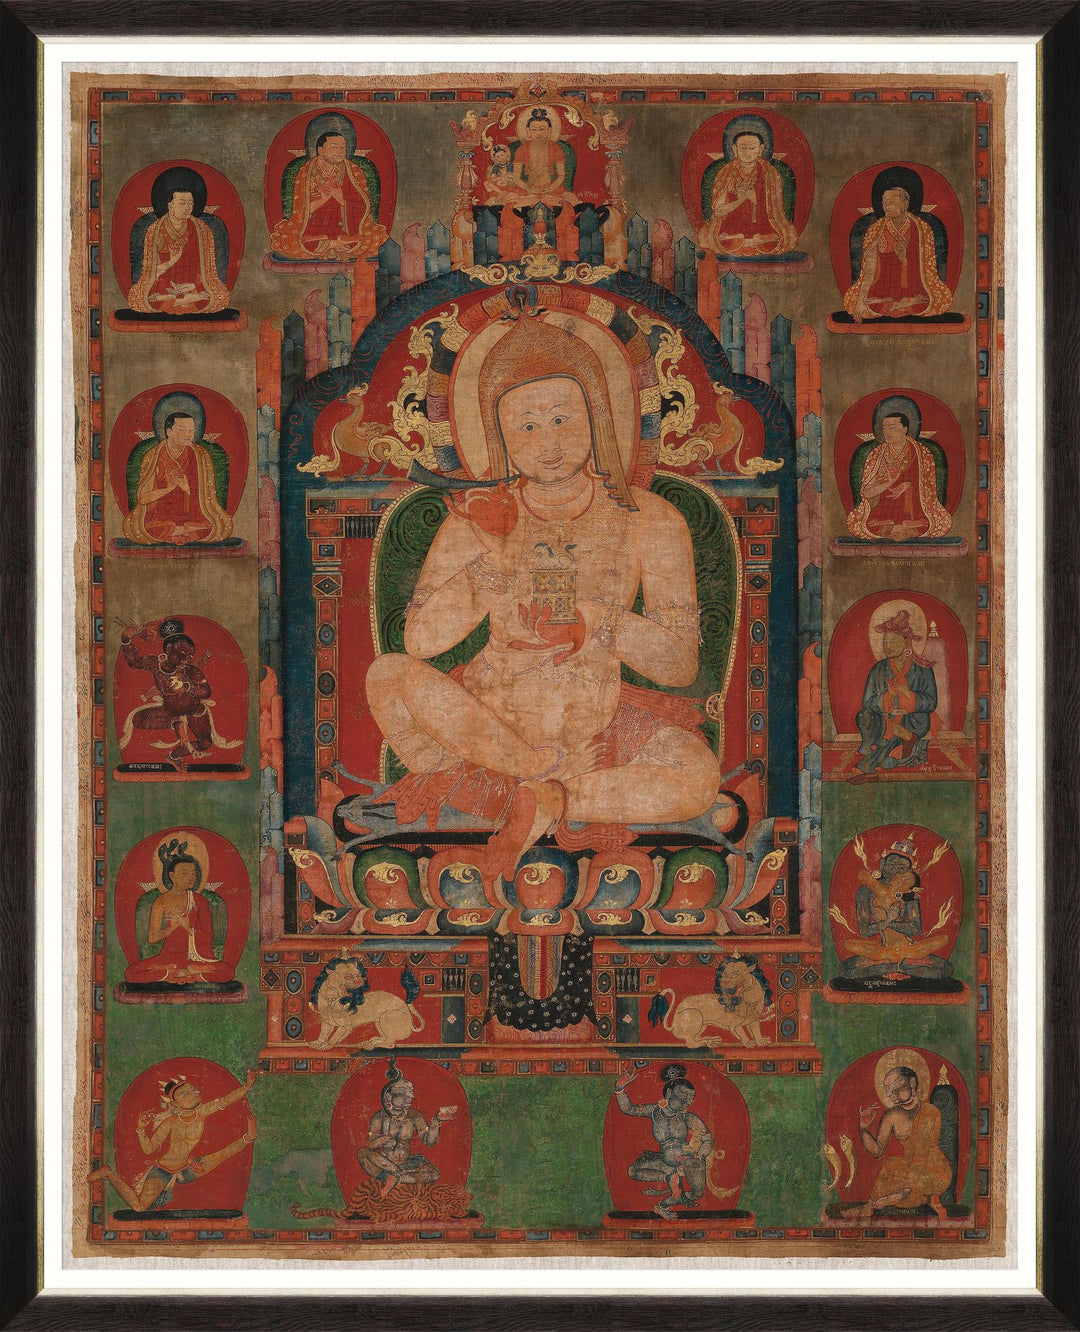 mind-the-gap-portrait-of-jnanatapa-wall-art-framed-artwork-home-of-an-eccentric-man-collection-tibetan-culture